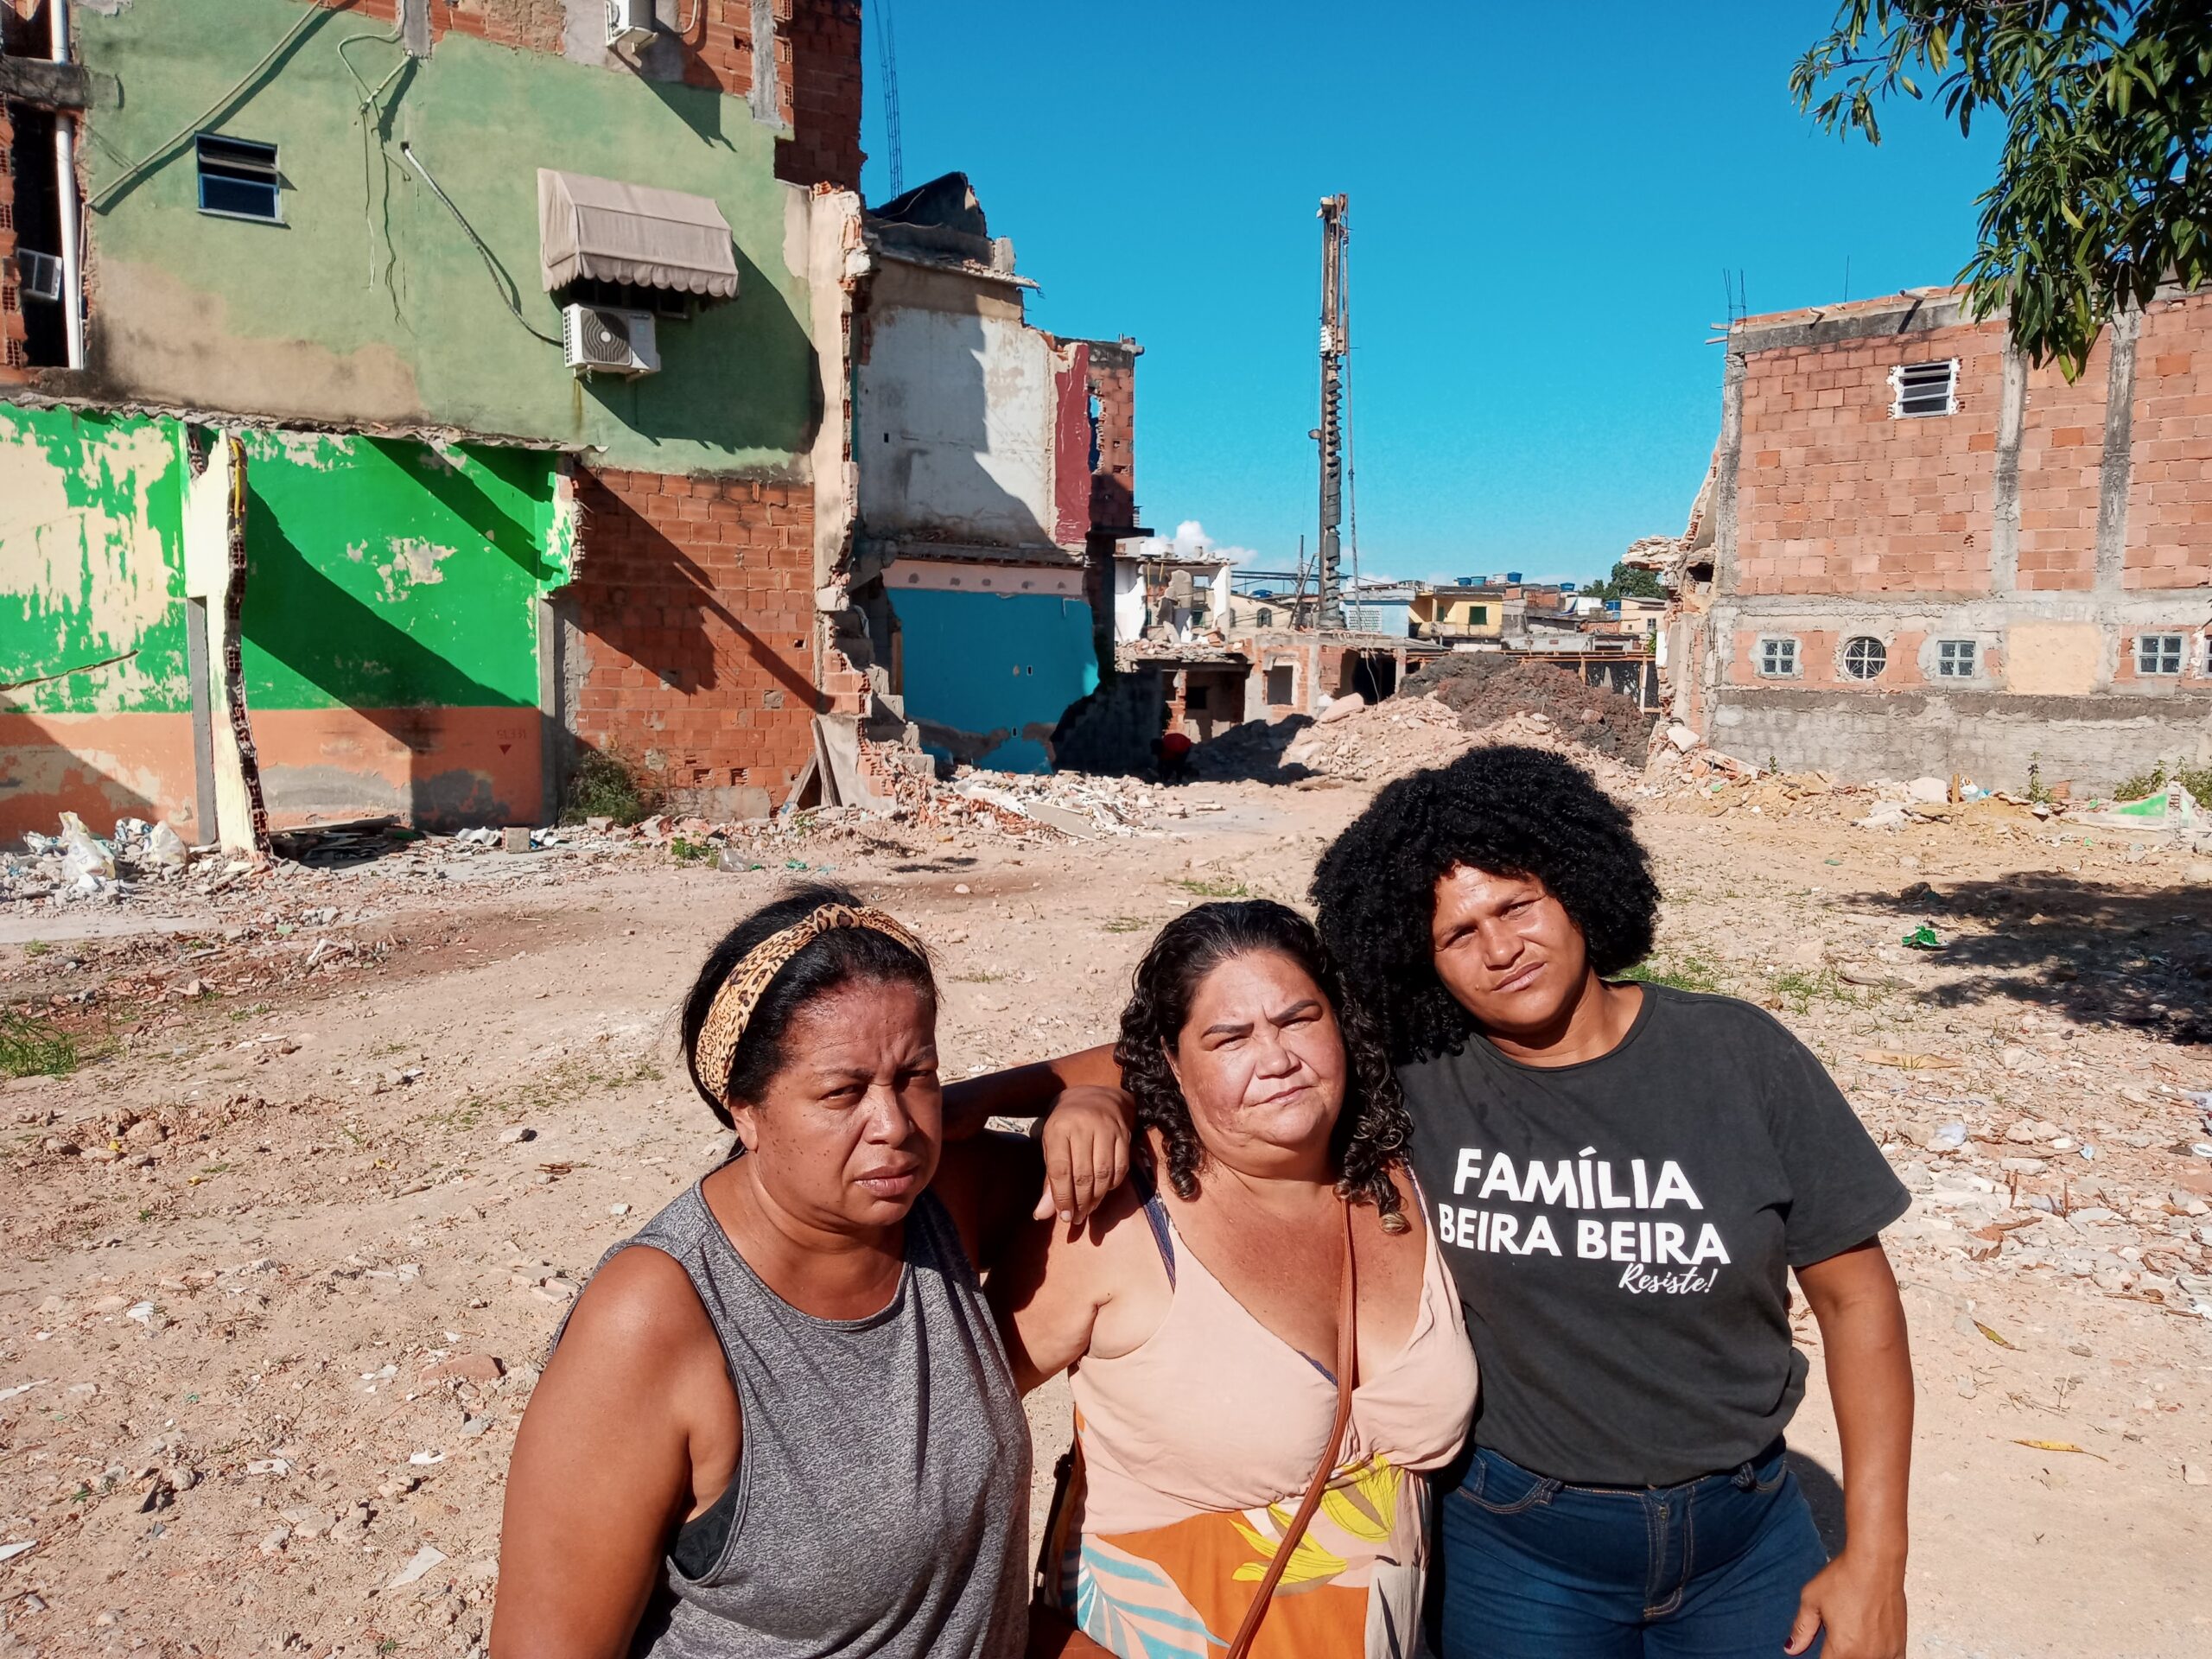 Left to right, residents and activists Glaucia Quirino and Rose Silva from Favela do Lixão, and Veinha, resident of Beira-Beira. Photo: Fabio Leon